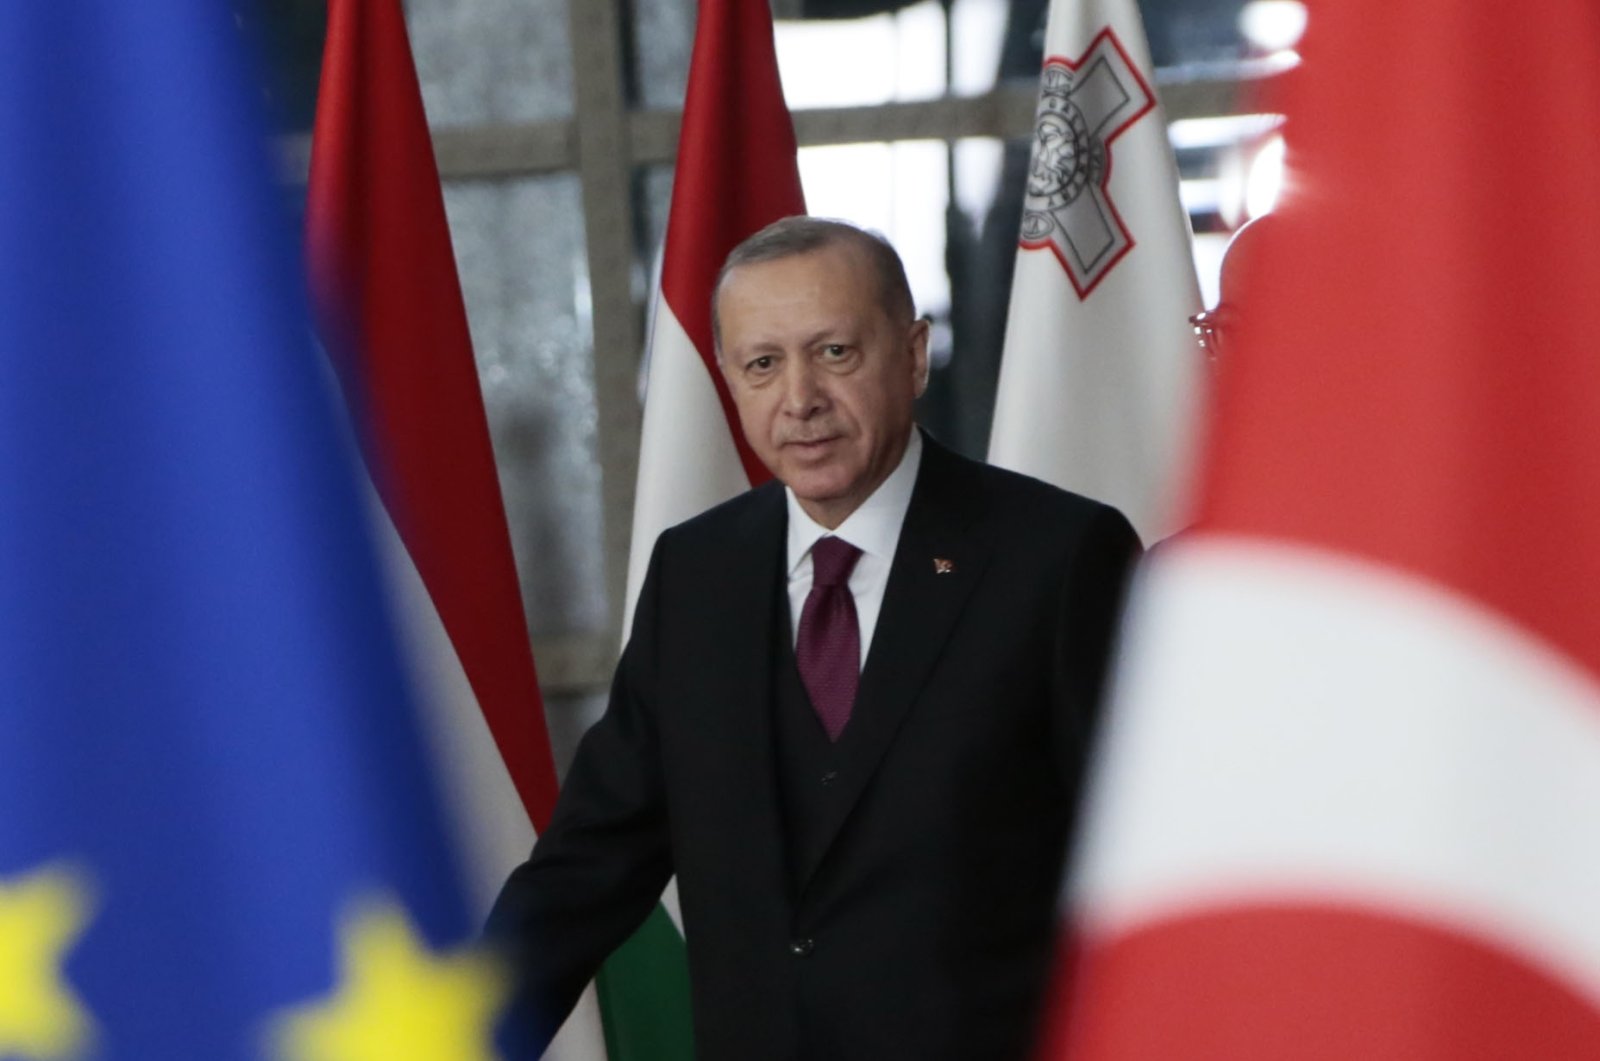 Türkiye menghormati peran pentingnya antara Timur dan Barat